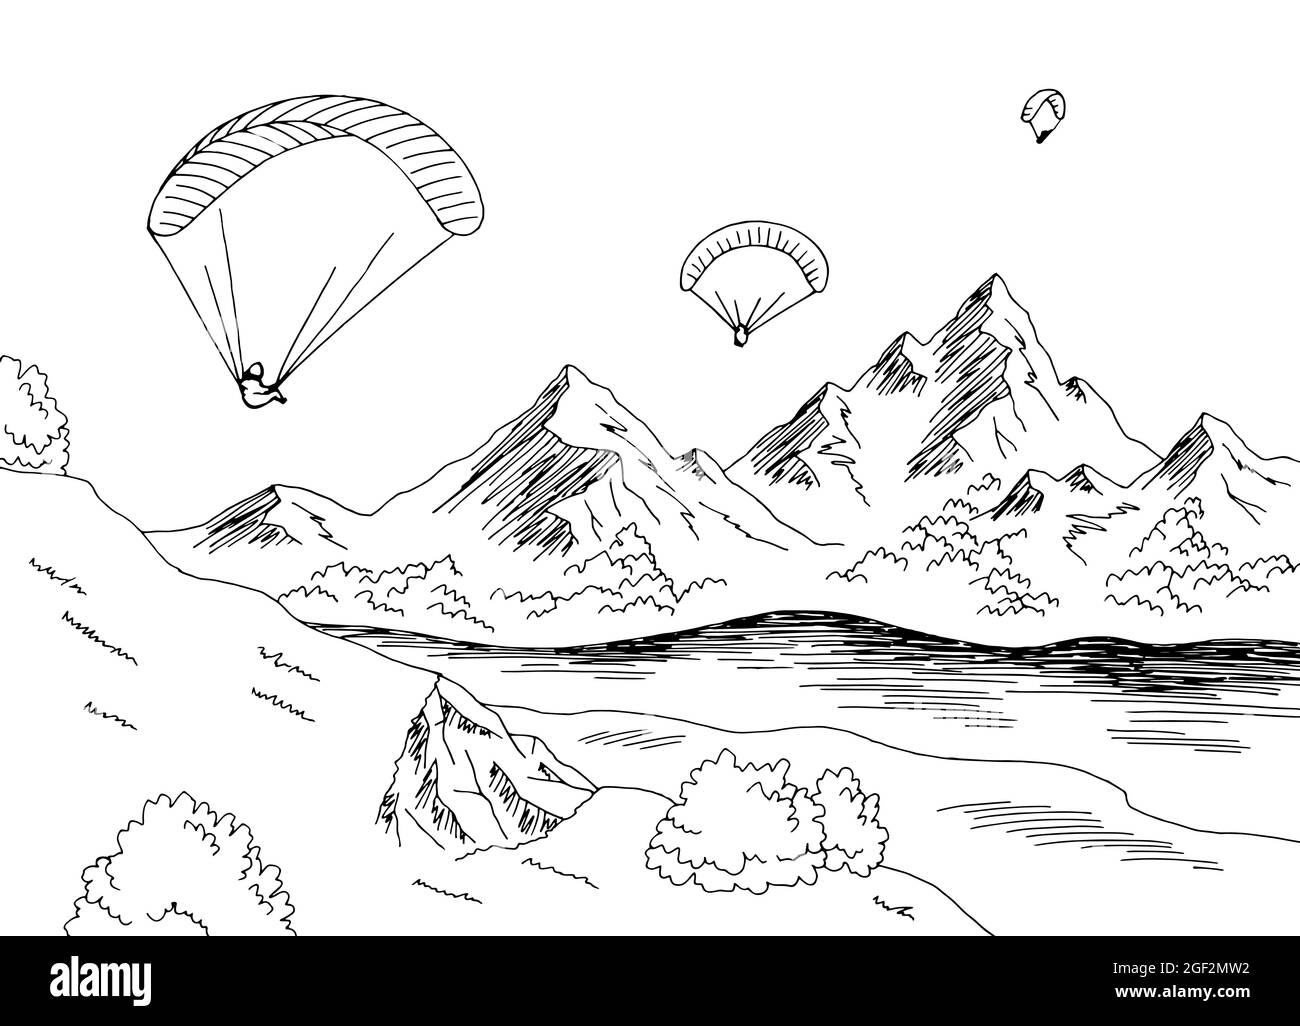 Gleitschirm fliegen Berg Fluss Grafik schwarz weiß Landschaft Skizze Illustration Vektor Stock Vektor